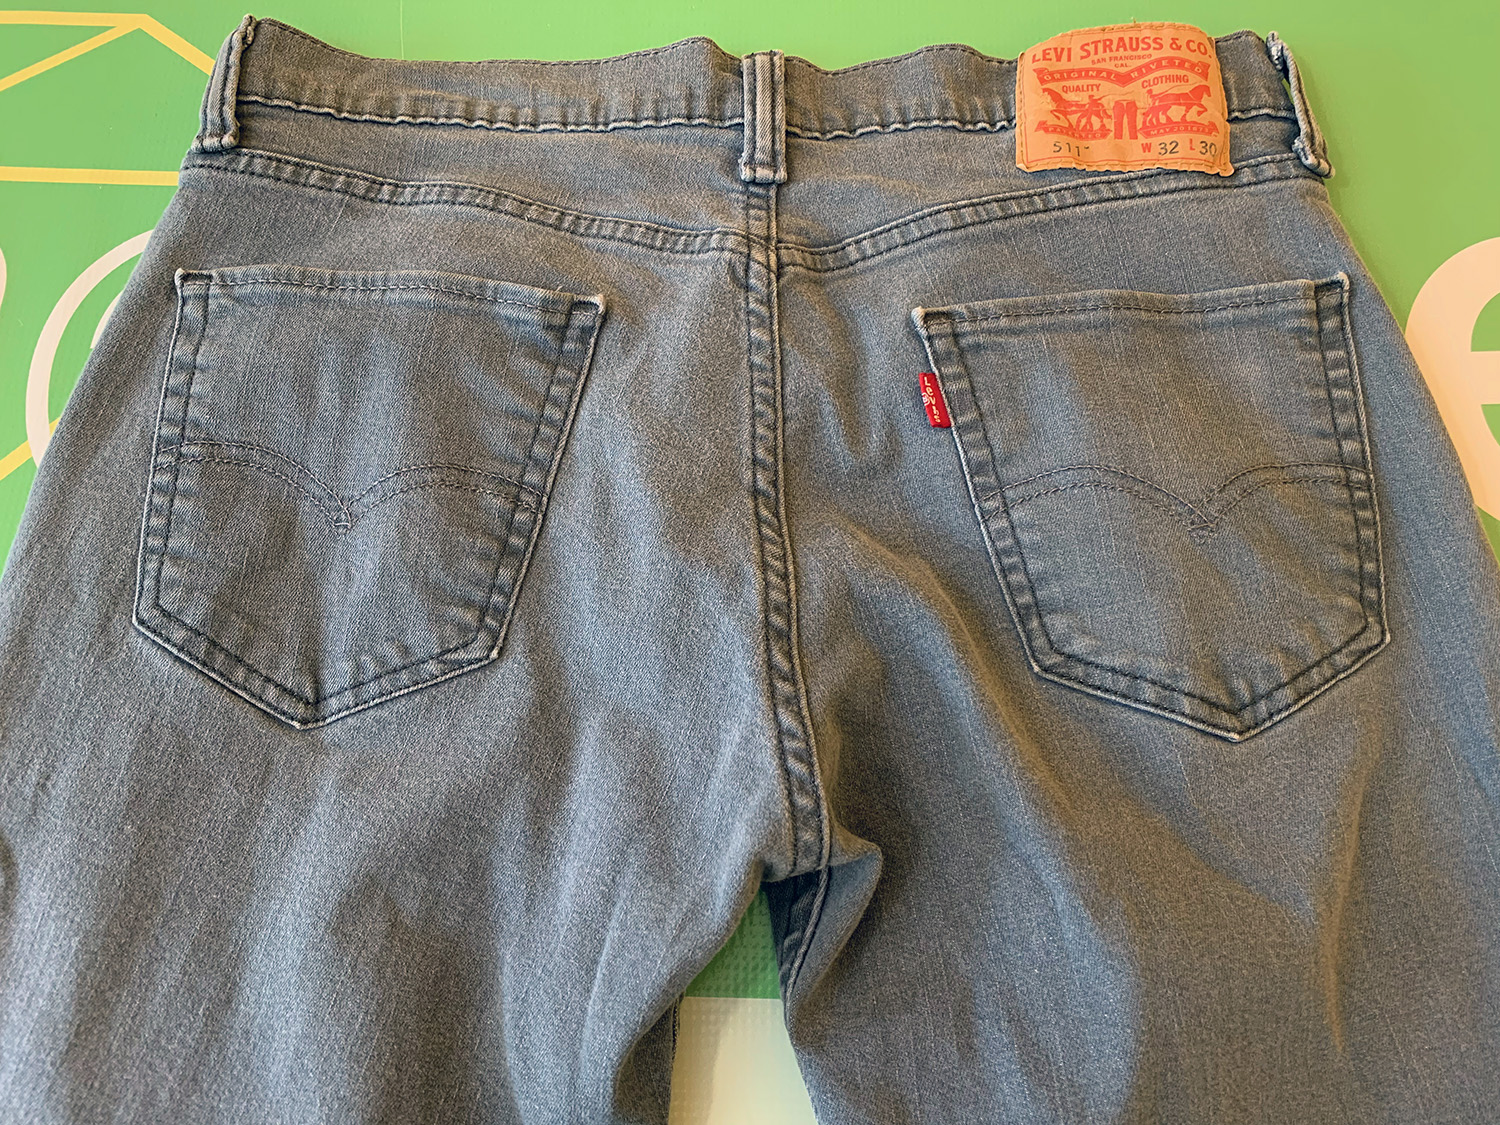 Levis Mens 511 Slim Fit Grey Jeans Hemmed to 32 x 28